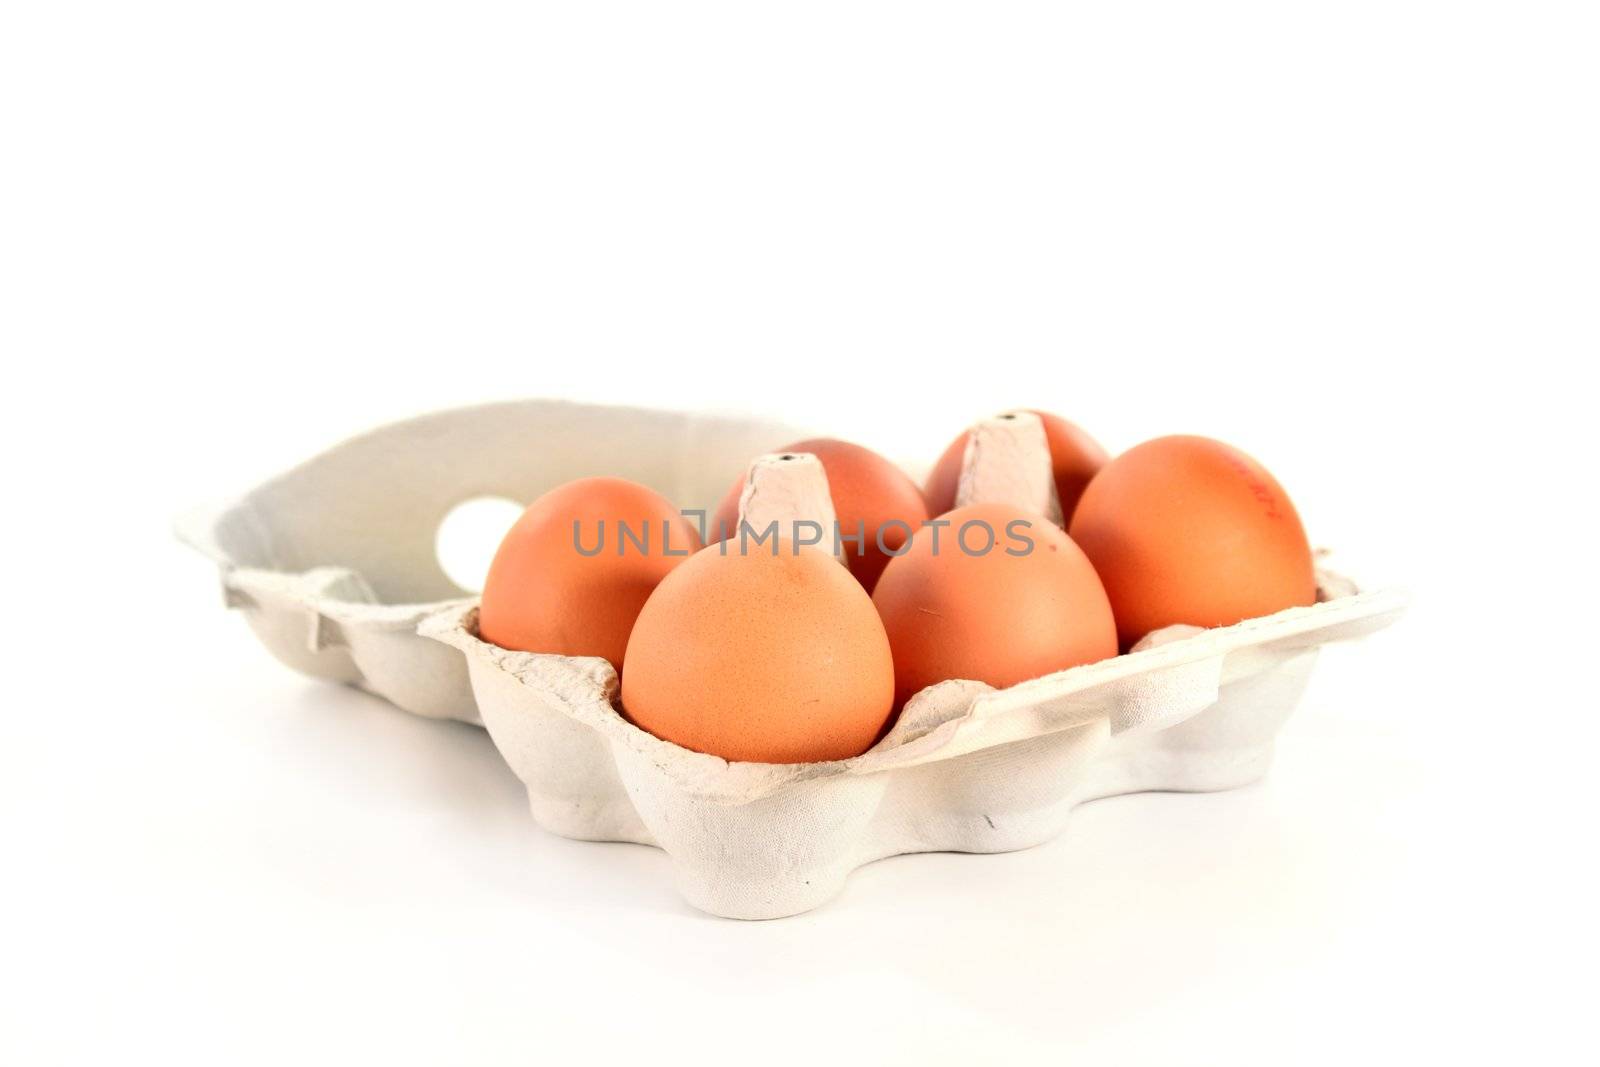 Eggs by silencefoto